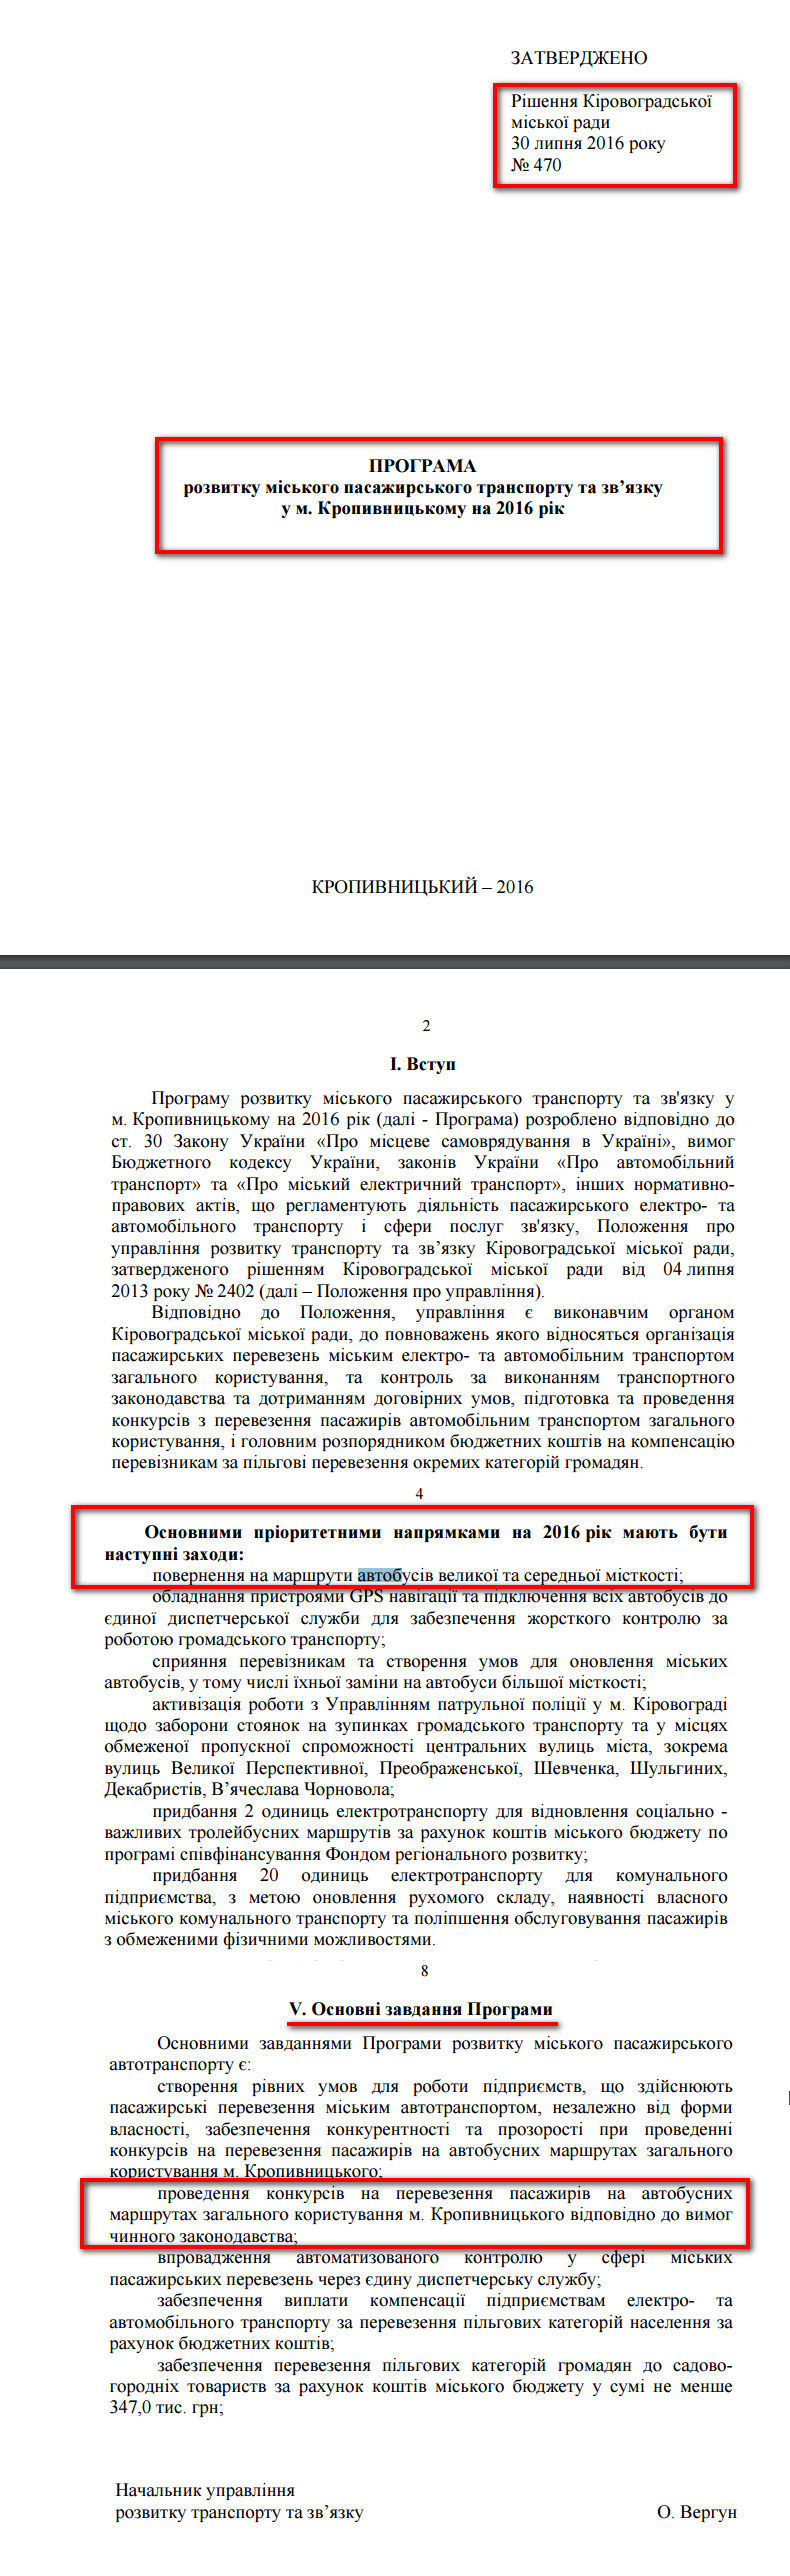 http://www.kr-rada.gov.ua/files/decision/ua-rishennya-dodatok-470-300716-08-08-2016.pdf